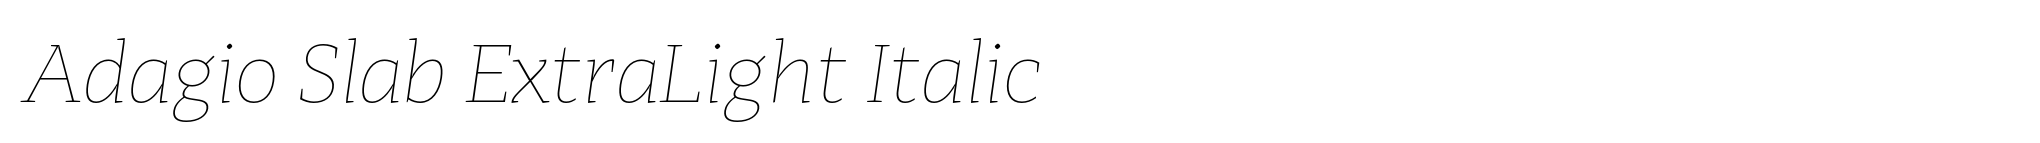 Adagio Slab ExtraLight Italic image